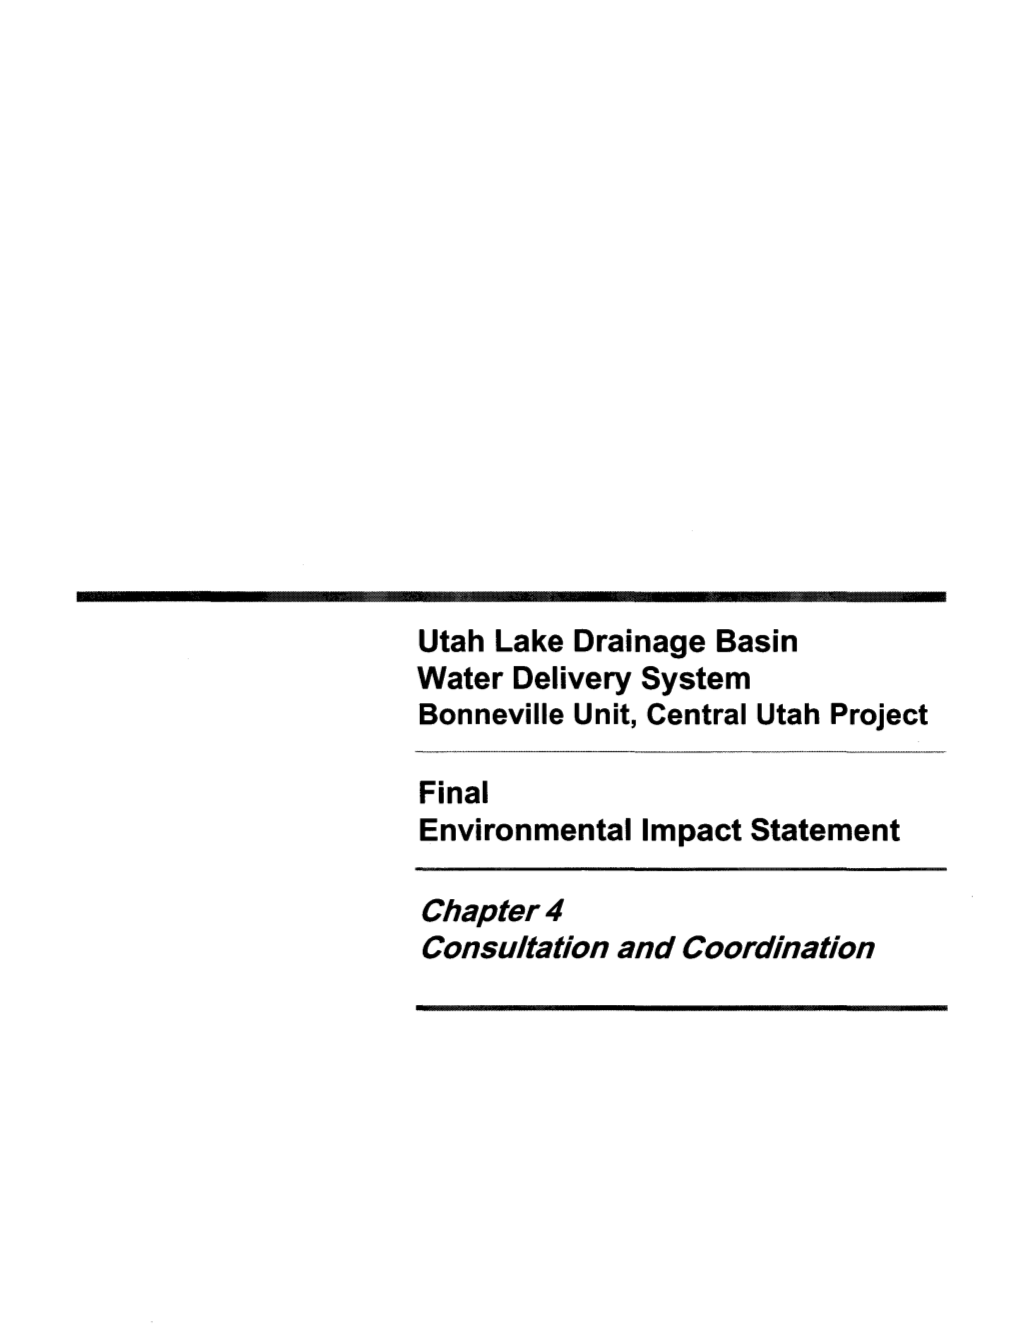 Utah Lake Drainage Basin Water Delivery System Bonneville Unit, Central Utah Project